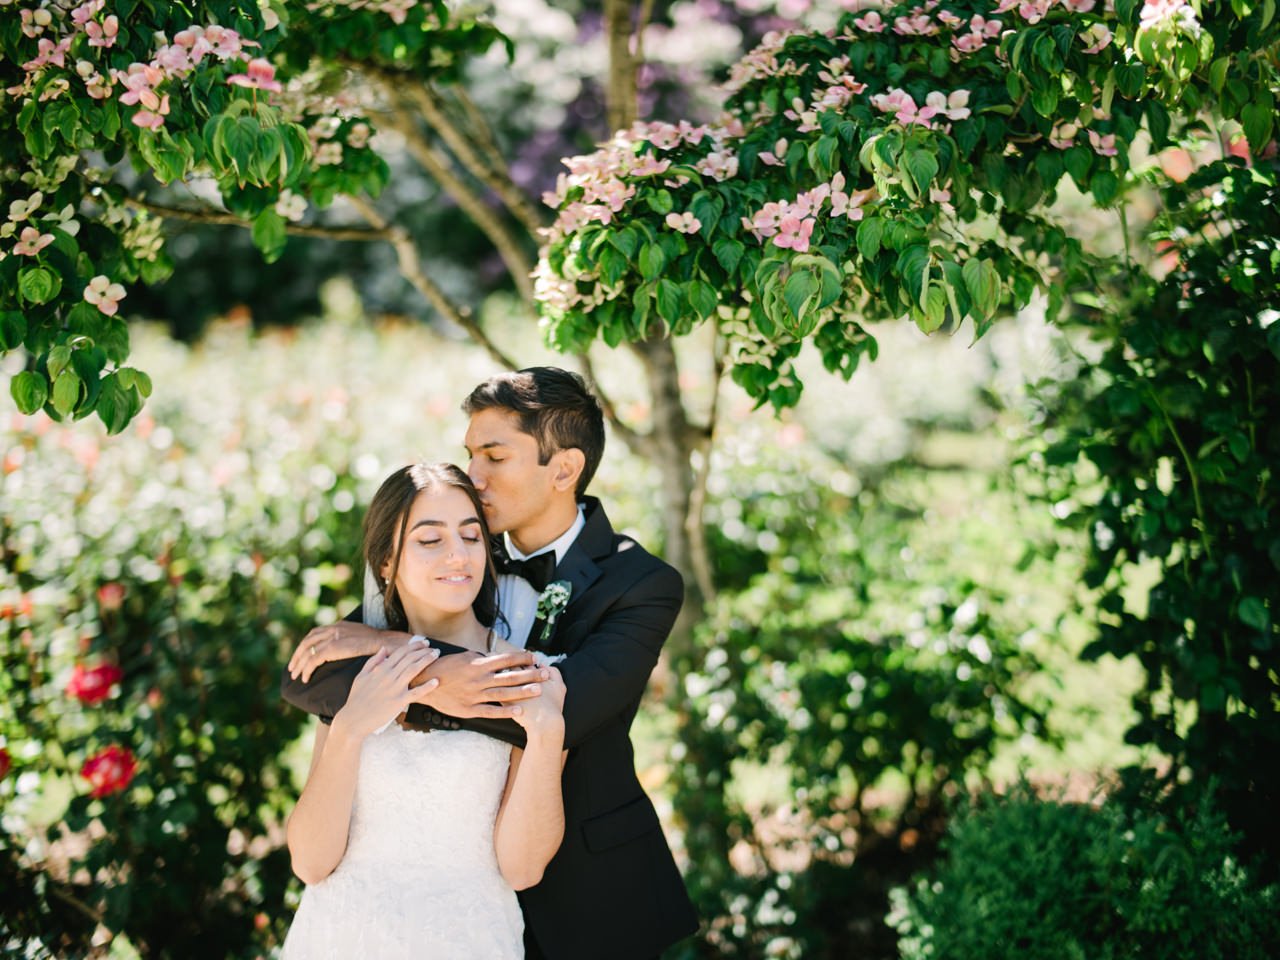  Groom kissing brides forehead under pink dogwood tree at portland rose test garden 